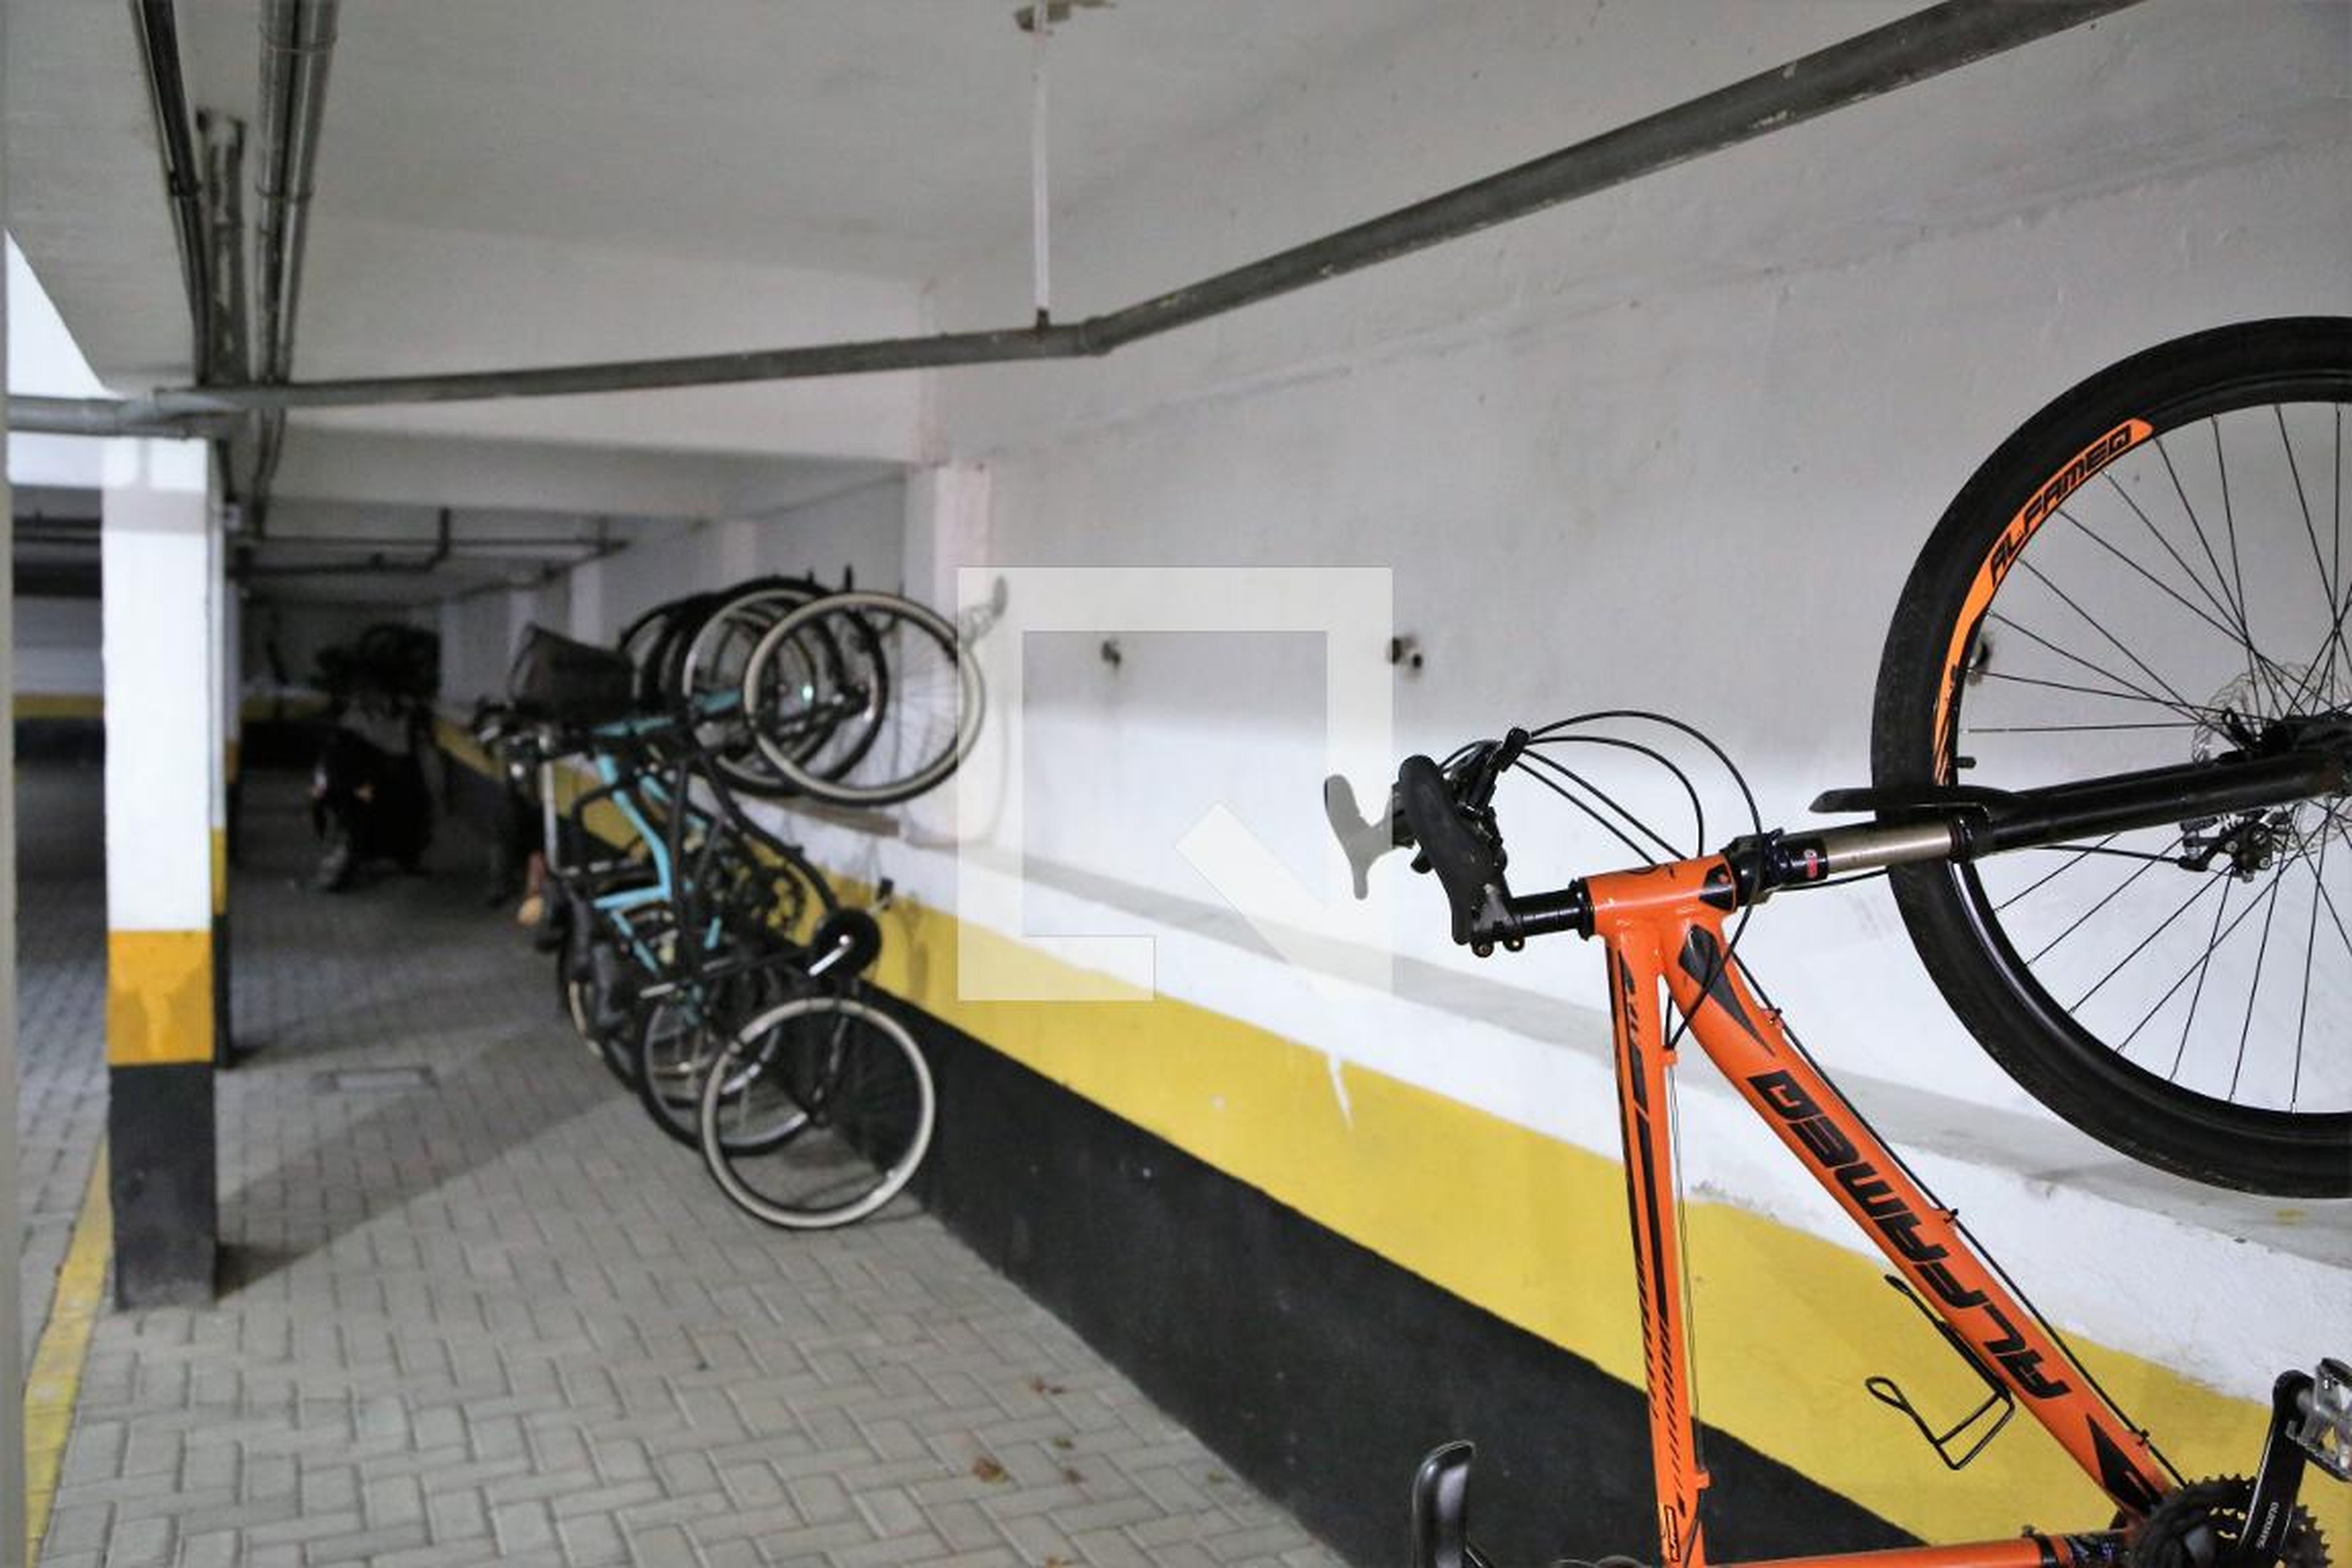 Bicicletario - Edifício Arjonas III